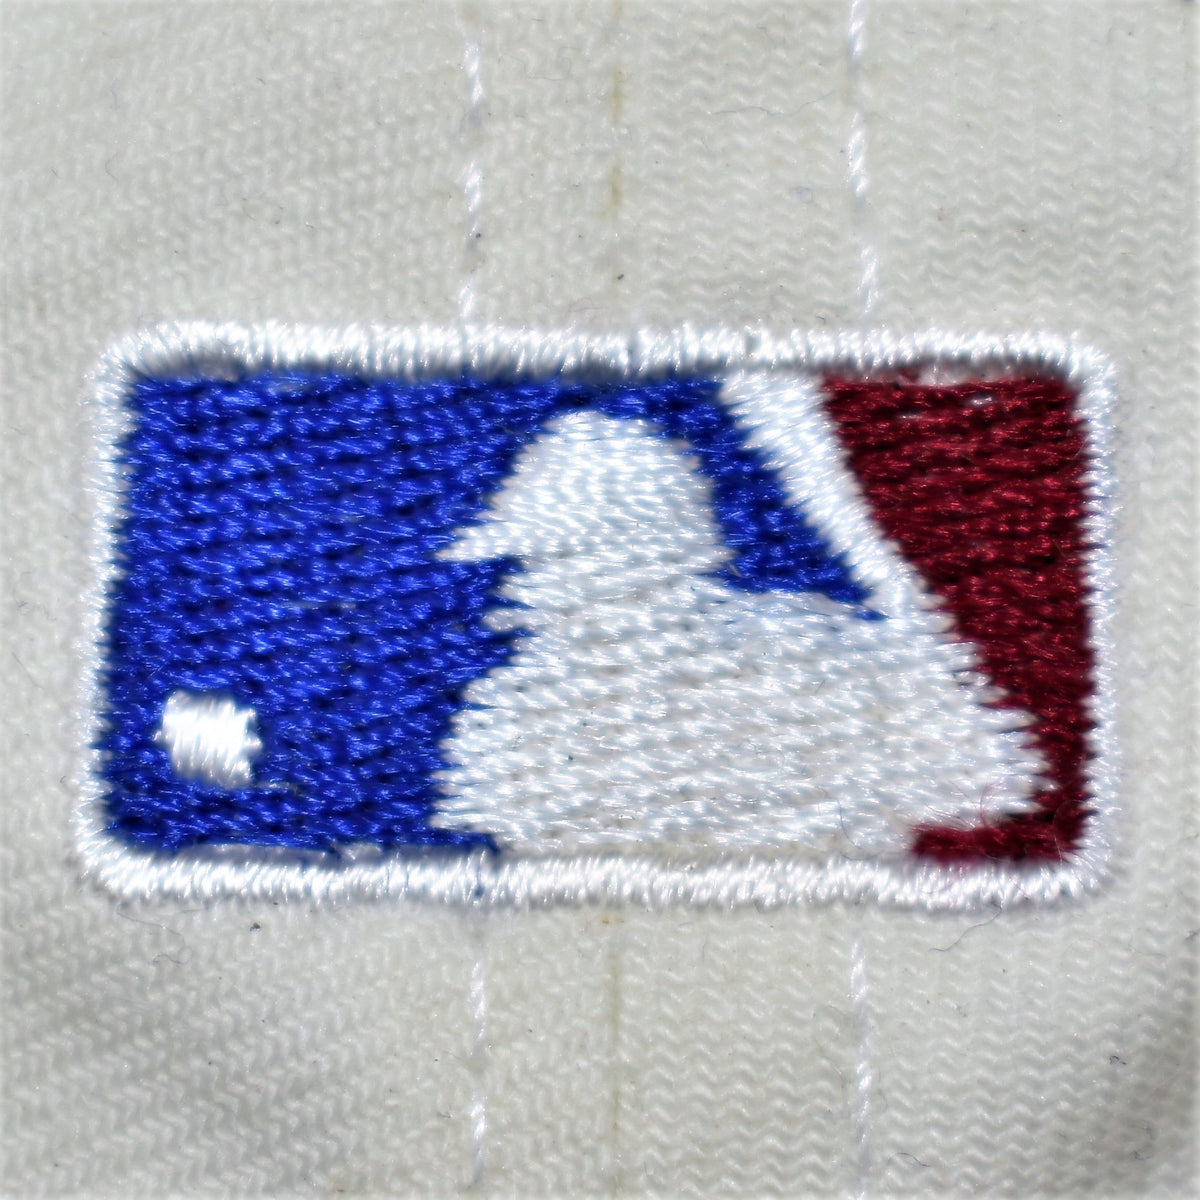 Cleveland Indians Carlos Baerga Starter SnapBack Hat Blue Embroidered NWT